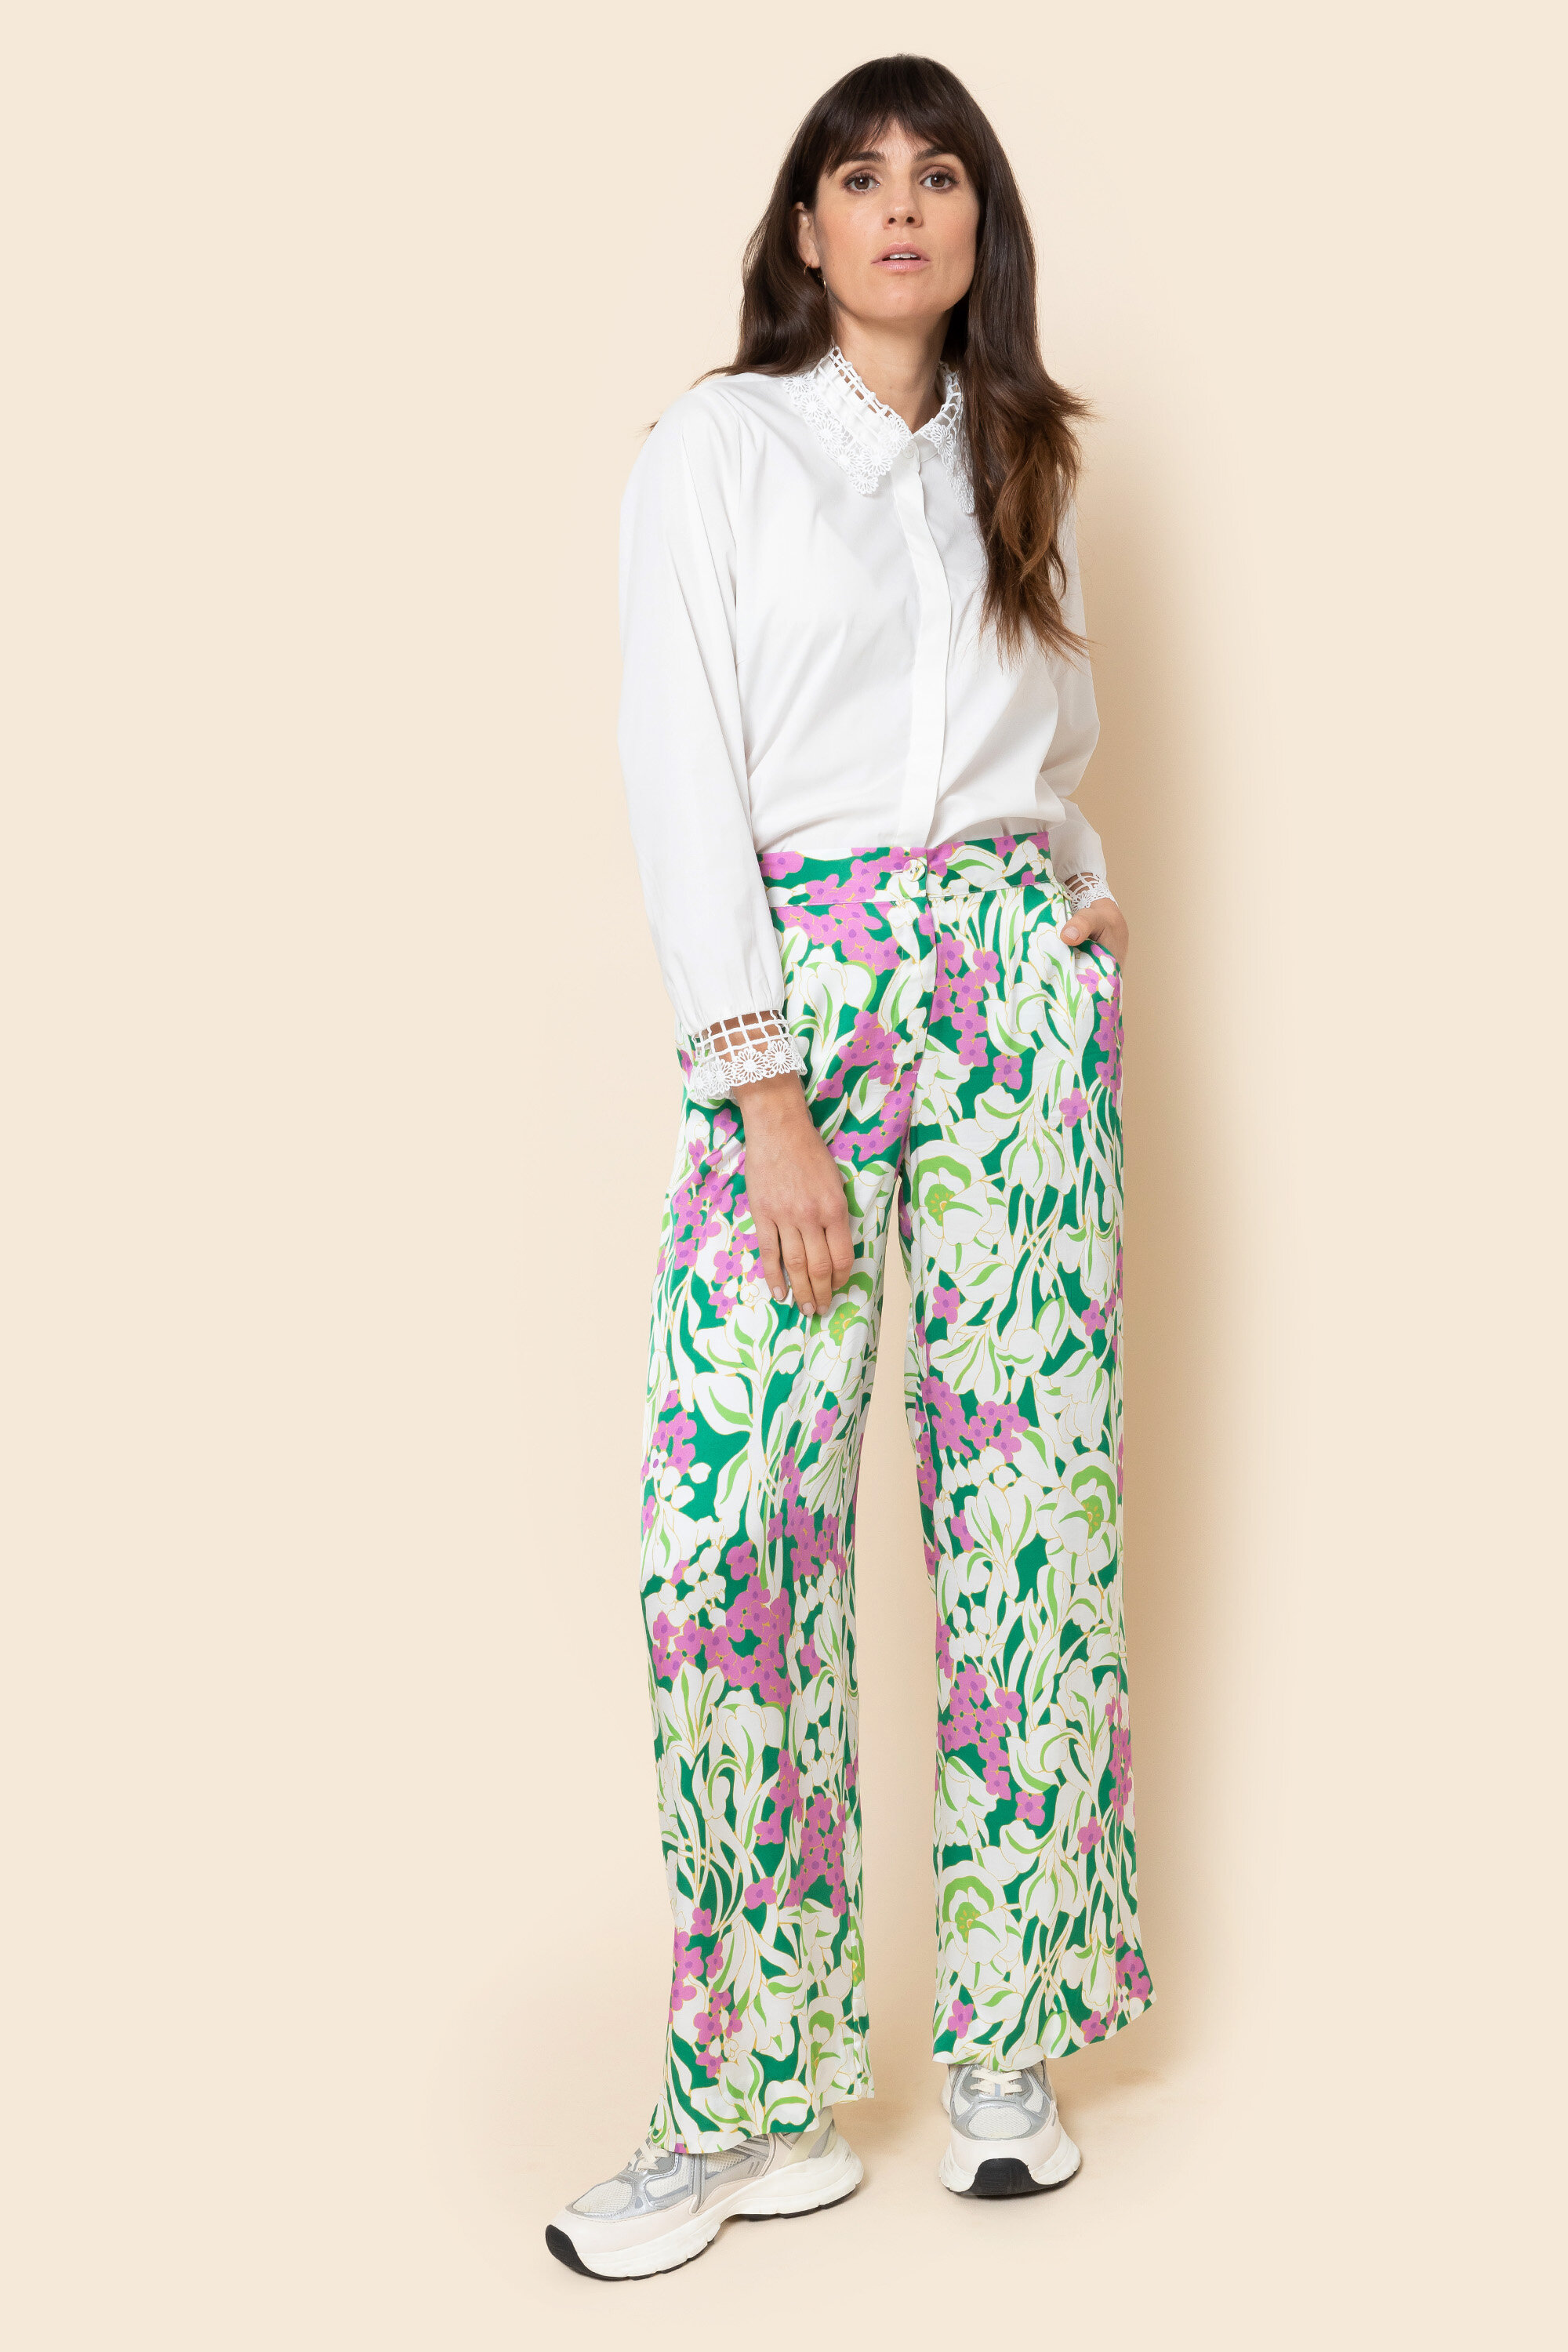 Beg Blijkbaar Bestrooi Lange losse broek met groen-paarse bloemenprint - Broeken & jeans - Dames -  Terre Bleue